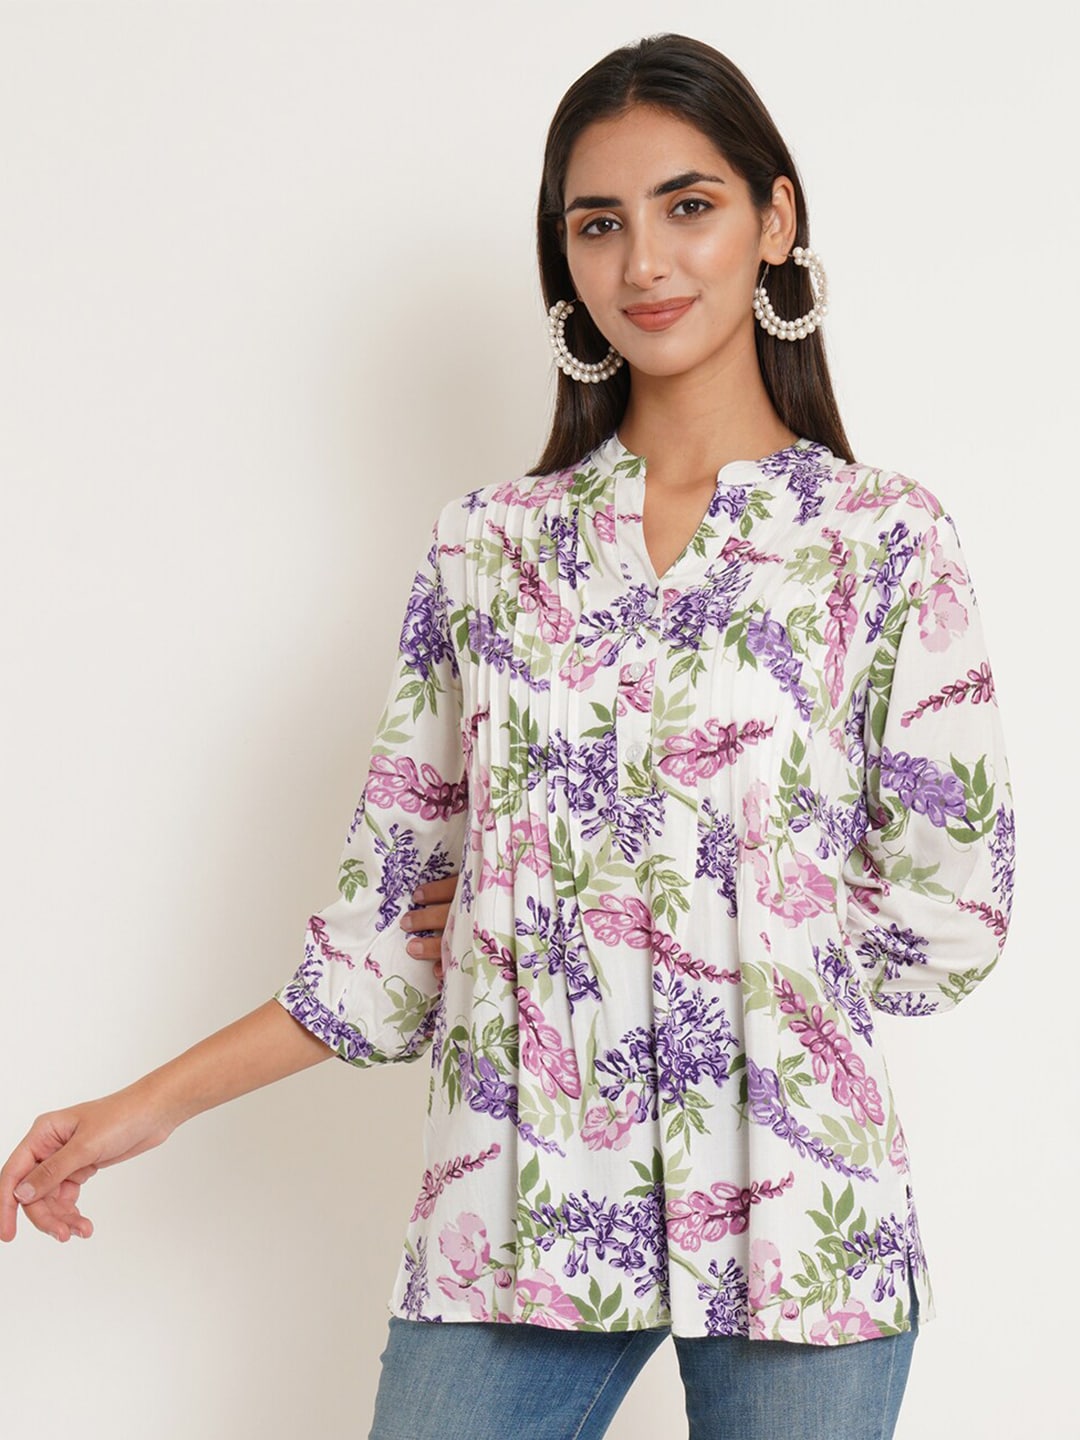 IX IMPRESSION White Floral Print Mandarin Collar Shirt Style Top Price in India